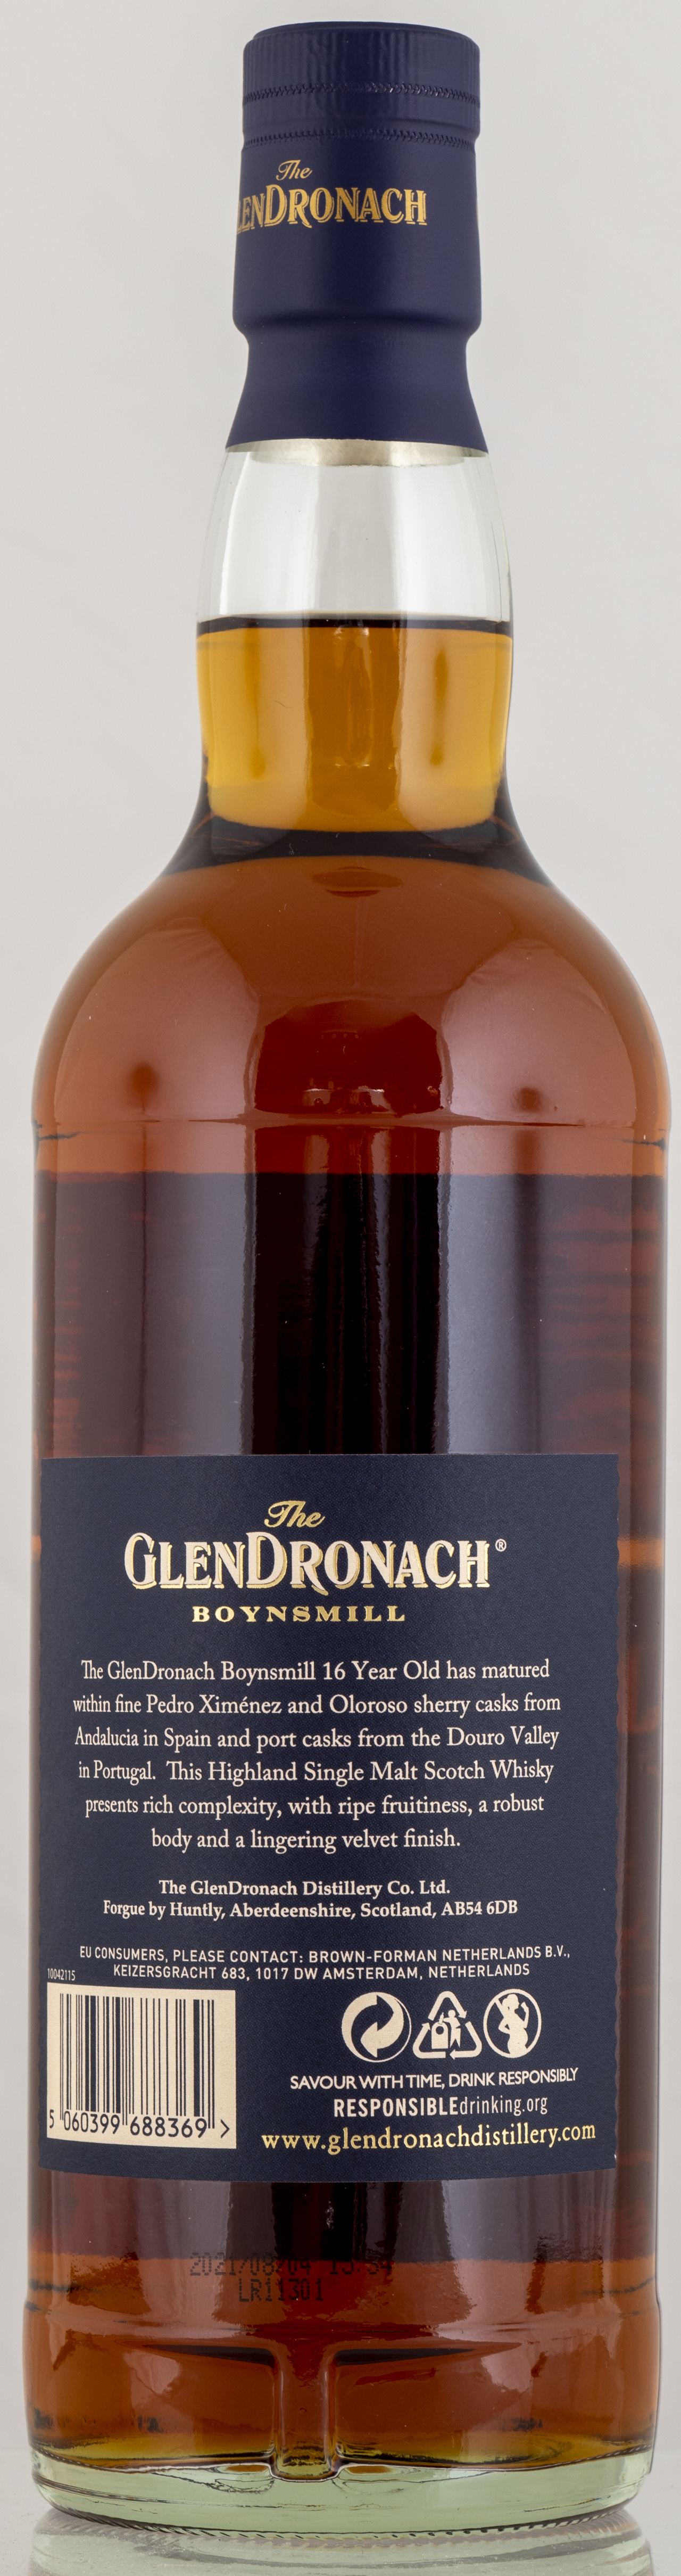 Billede: PHC_7296 - GlenDronach 16 Boynsmill - bottle back.jpg